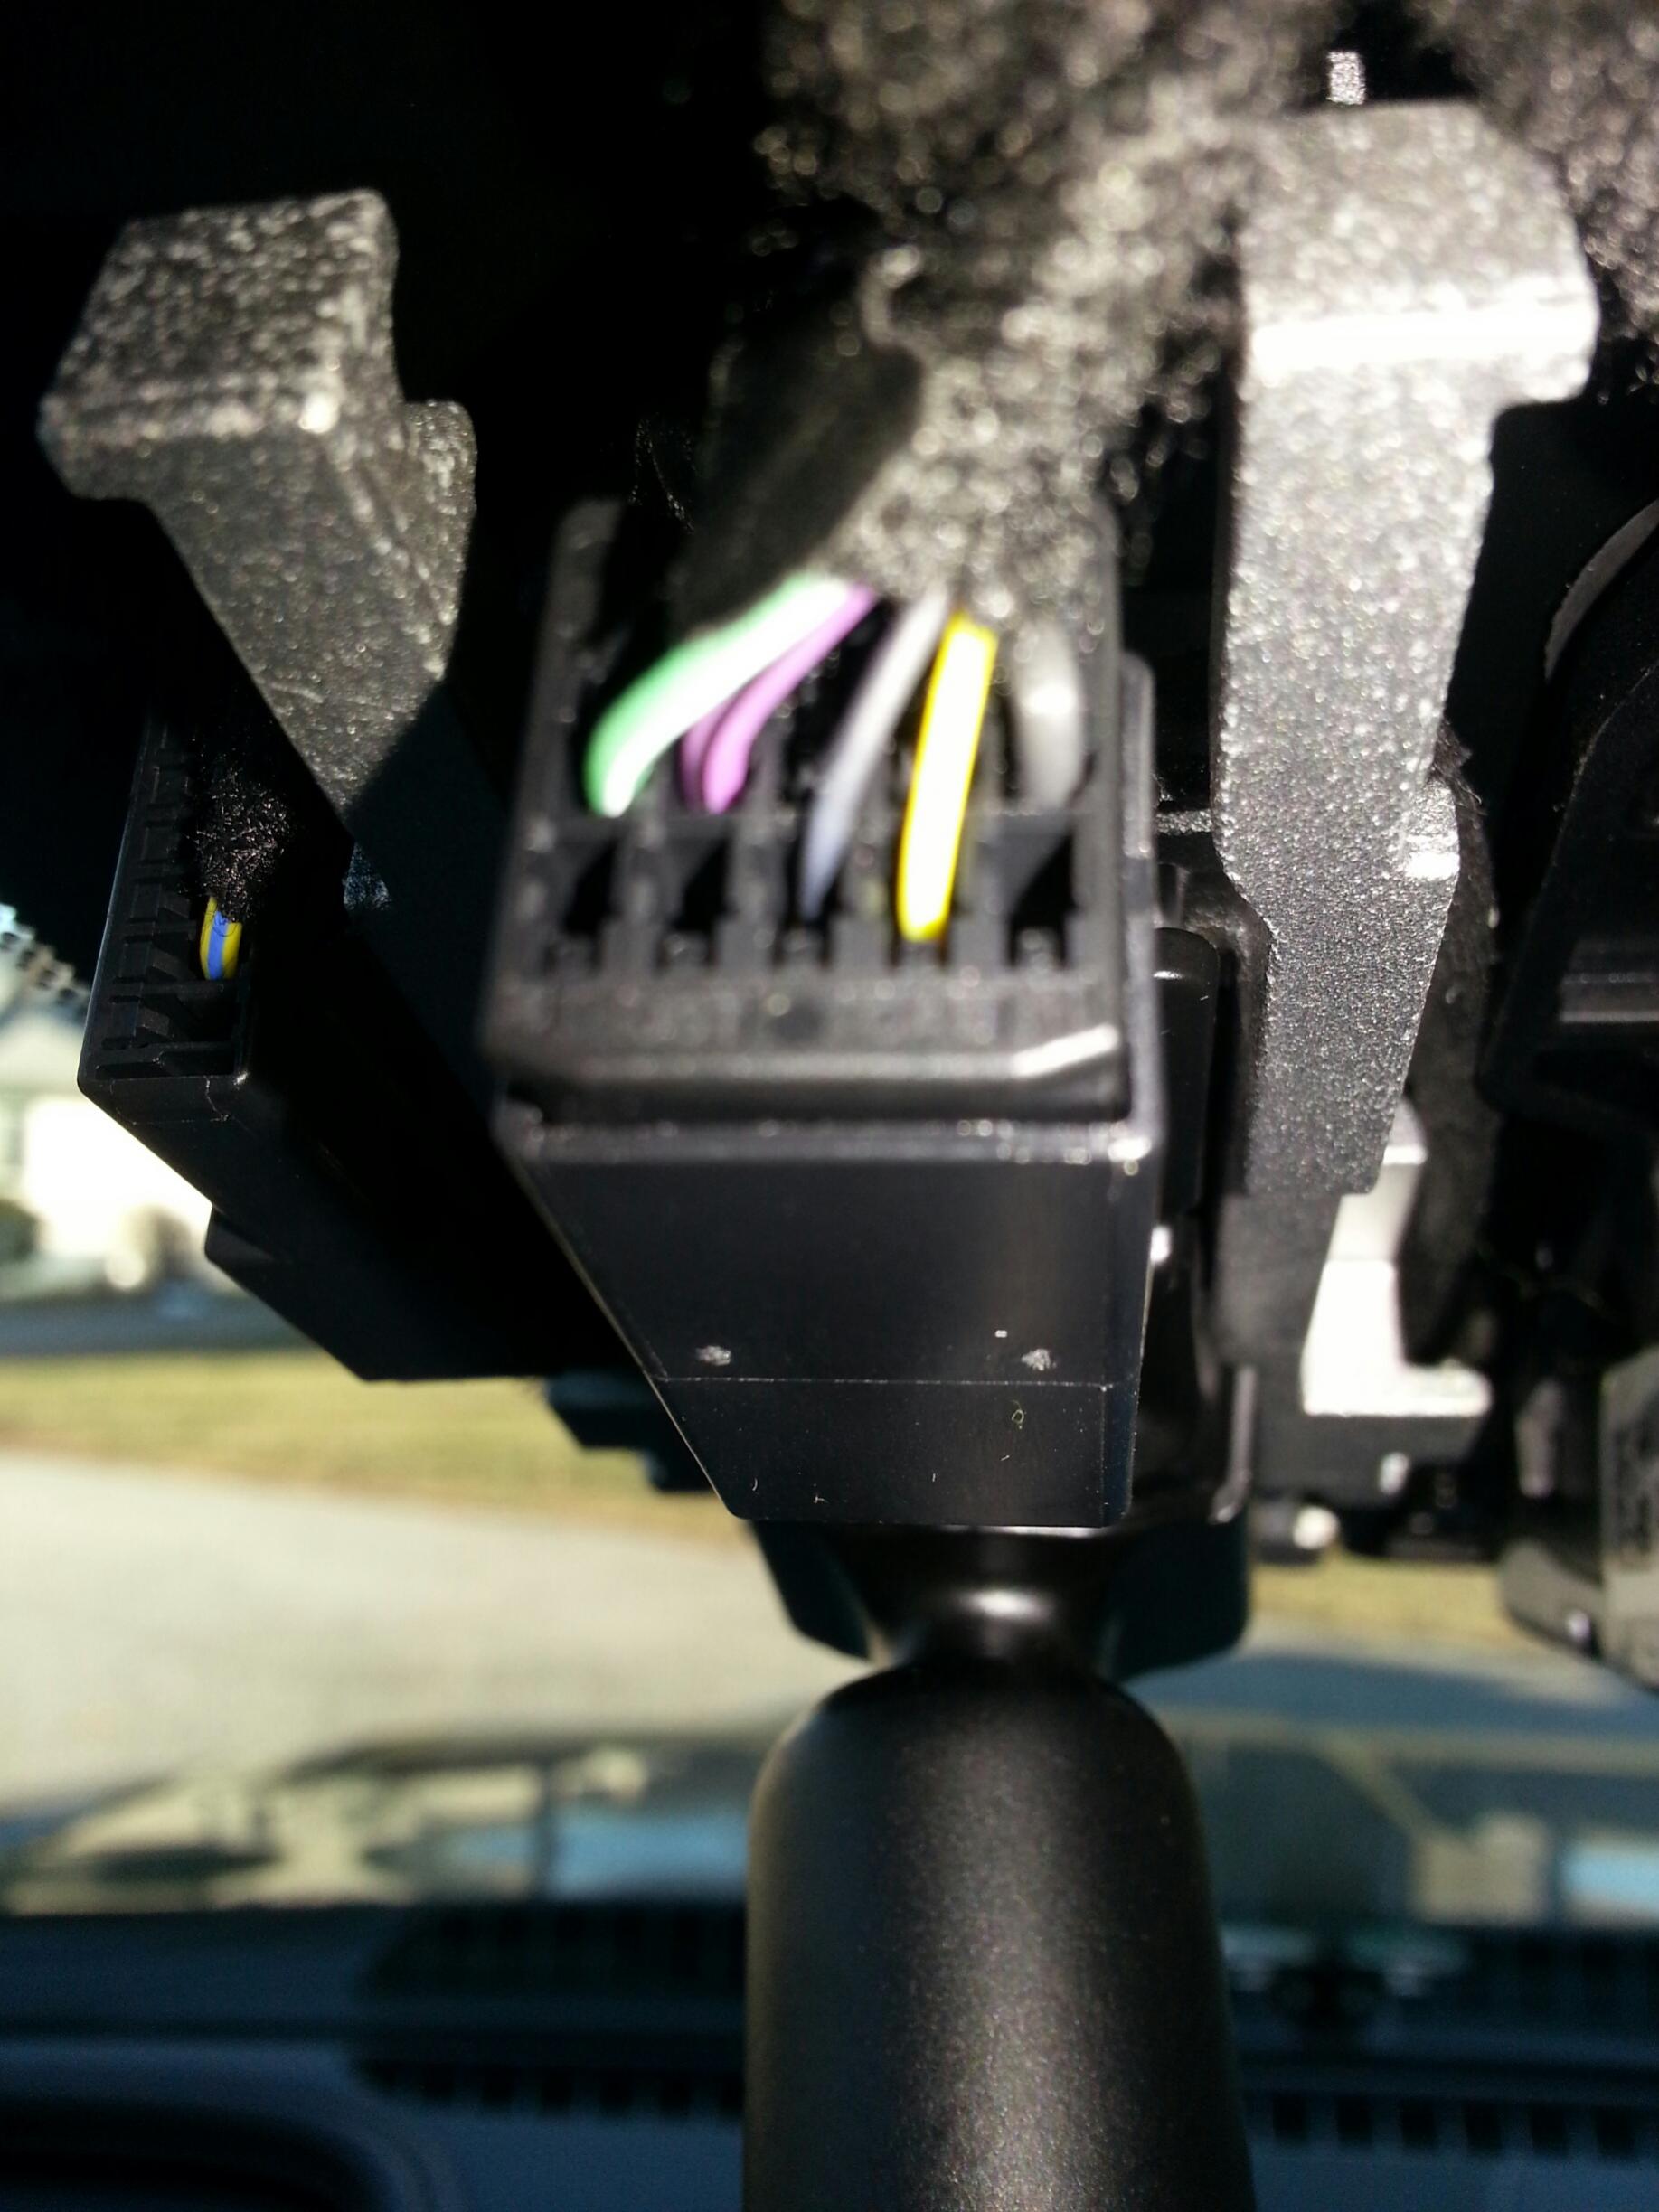 2014 Impala LTZ Mirror Tap/ Blend Mount for Radar Detector ... fuse diagram 2007 